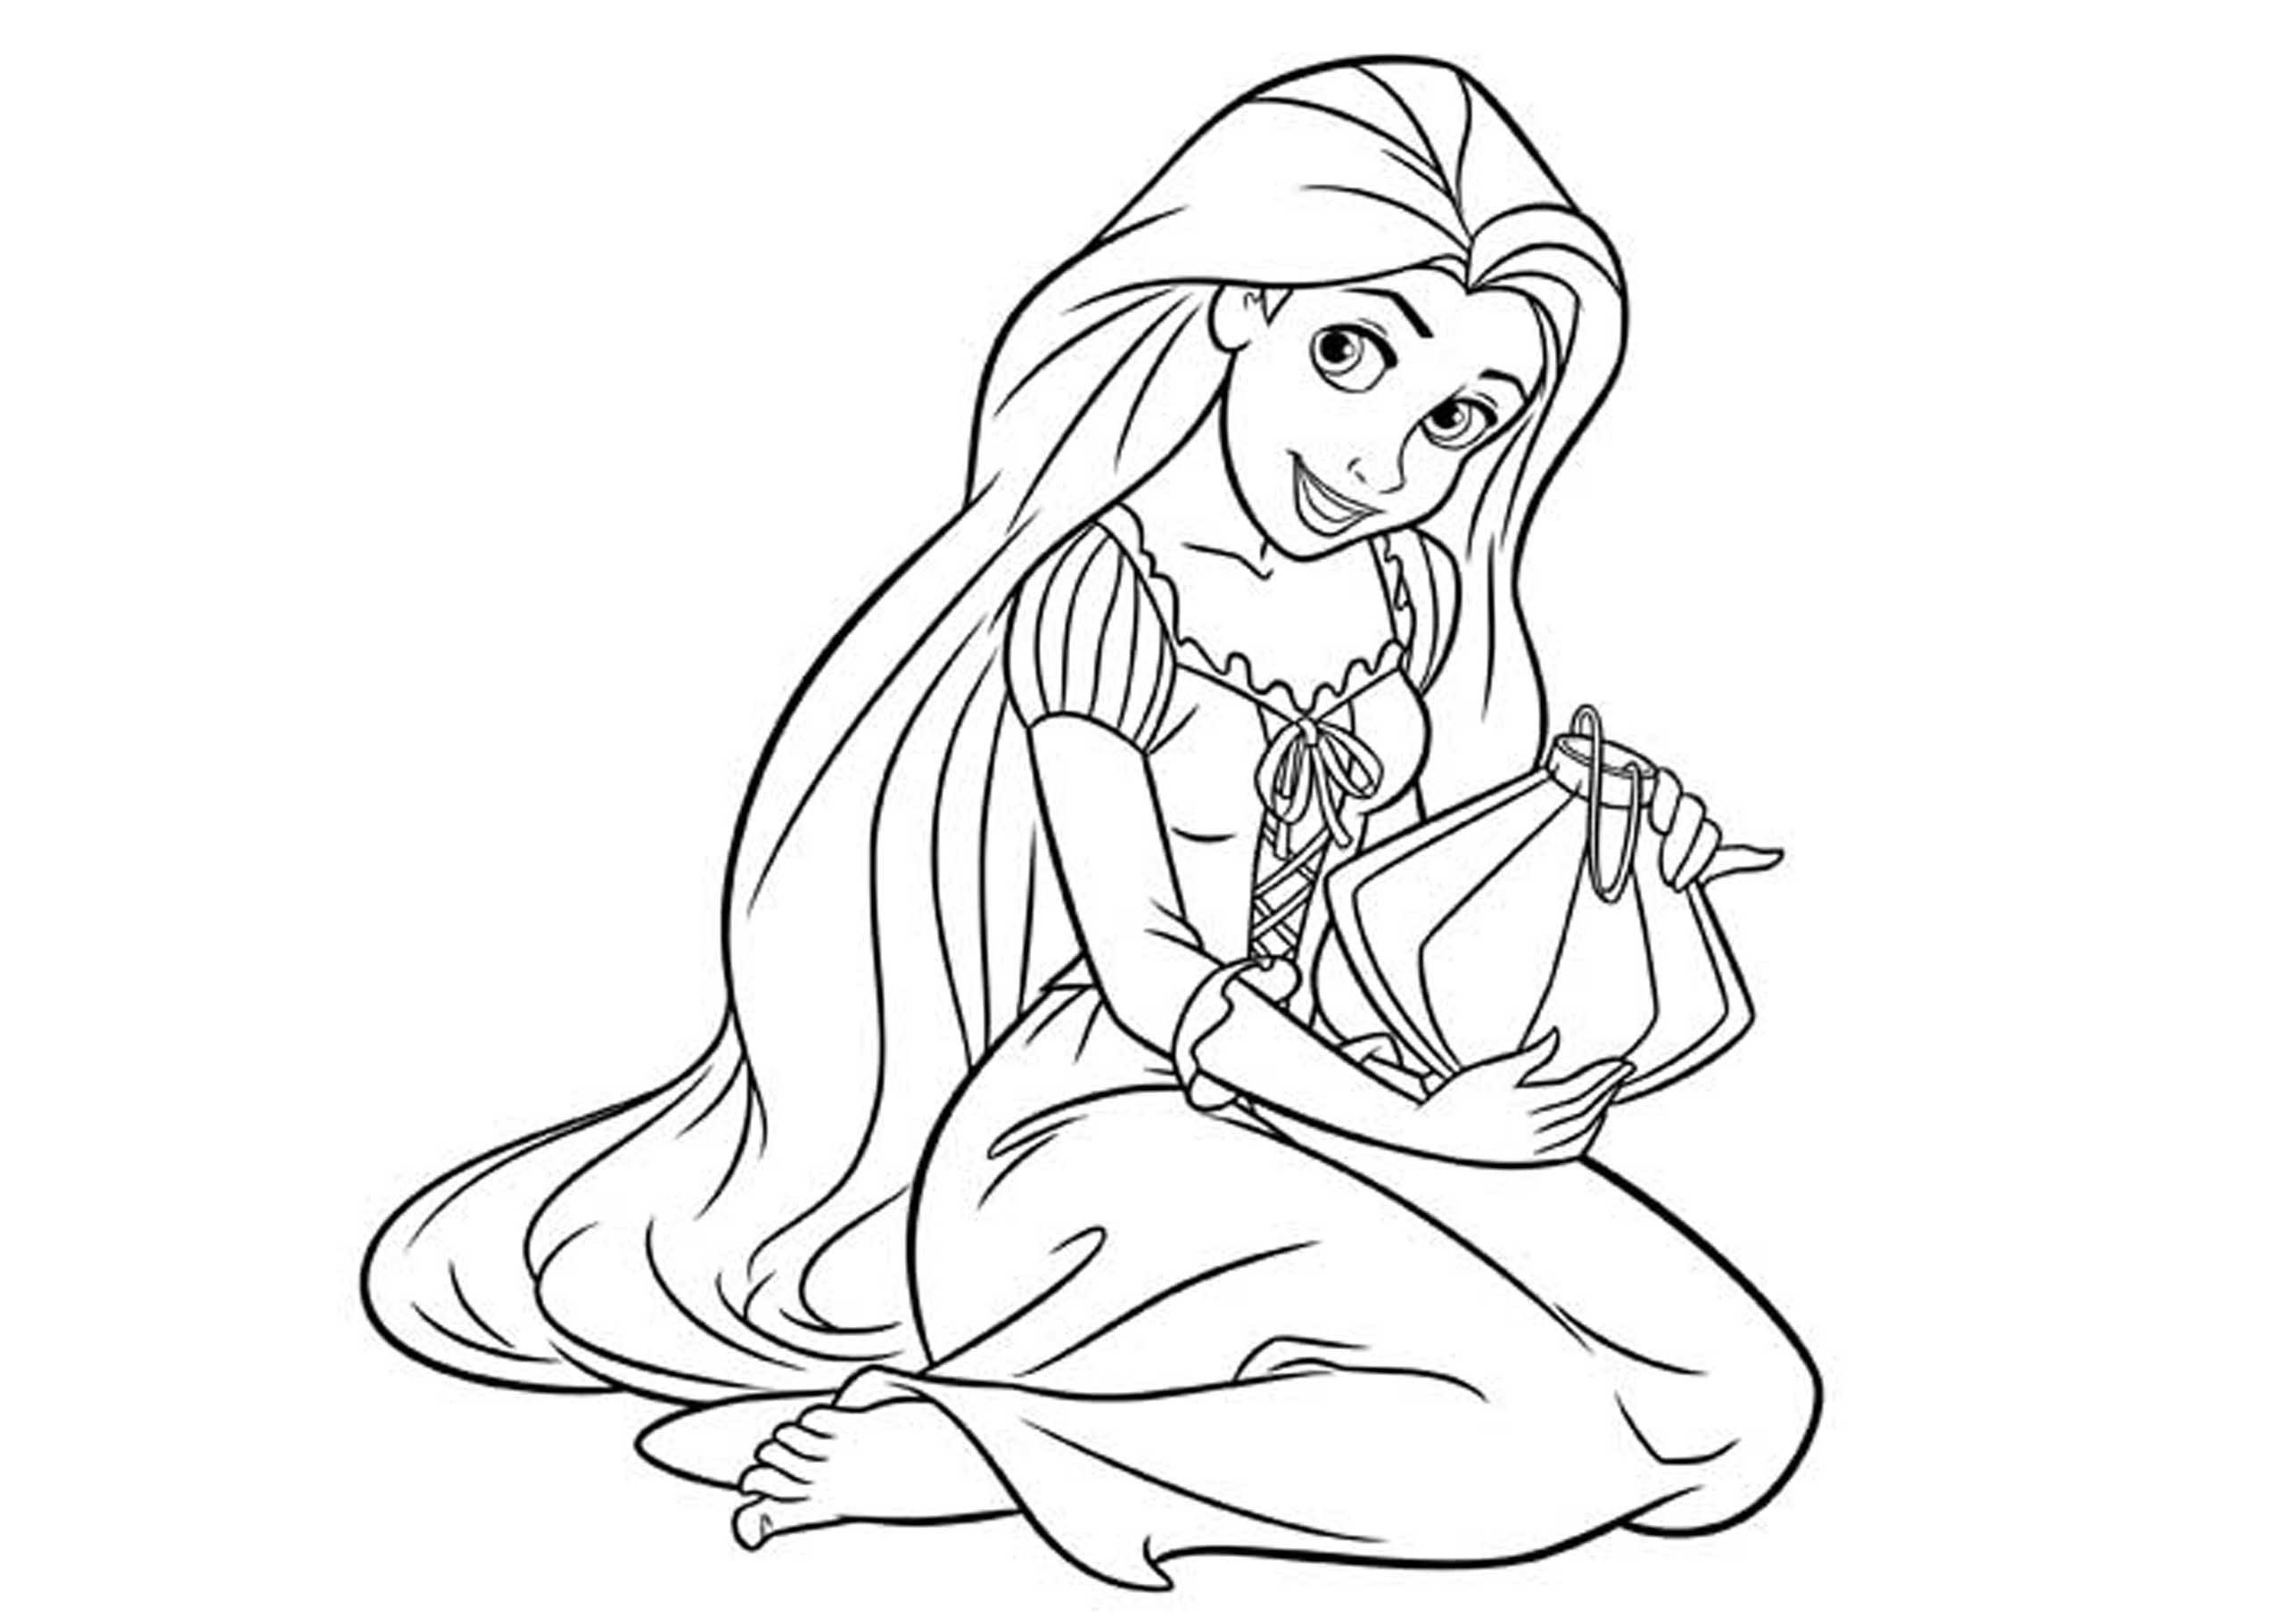 Disney Princess Coloring Pages Pdf at GetDrawings | Free ...